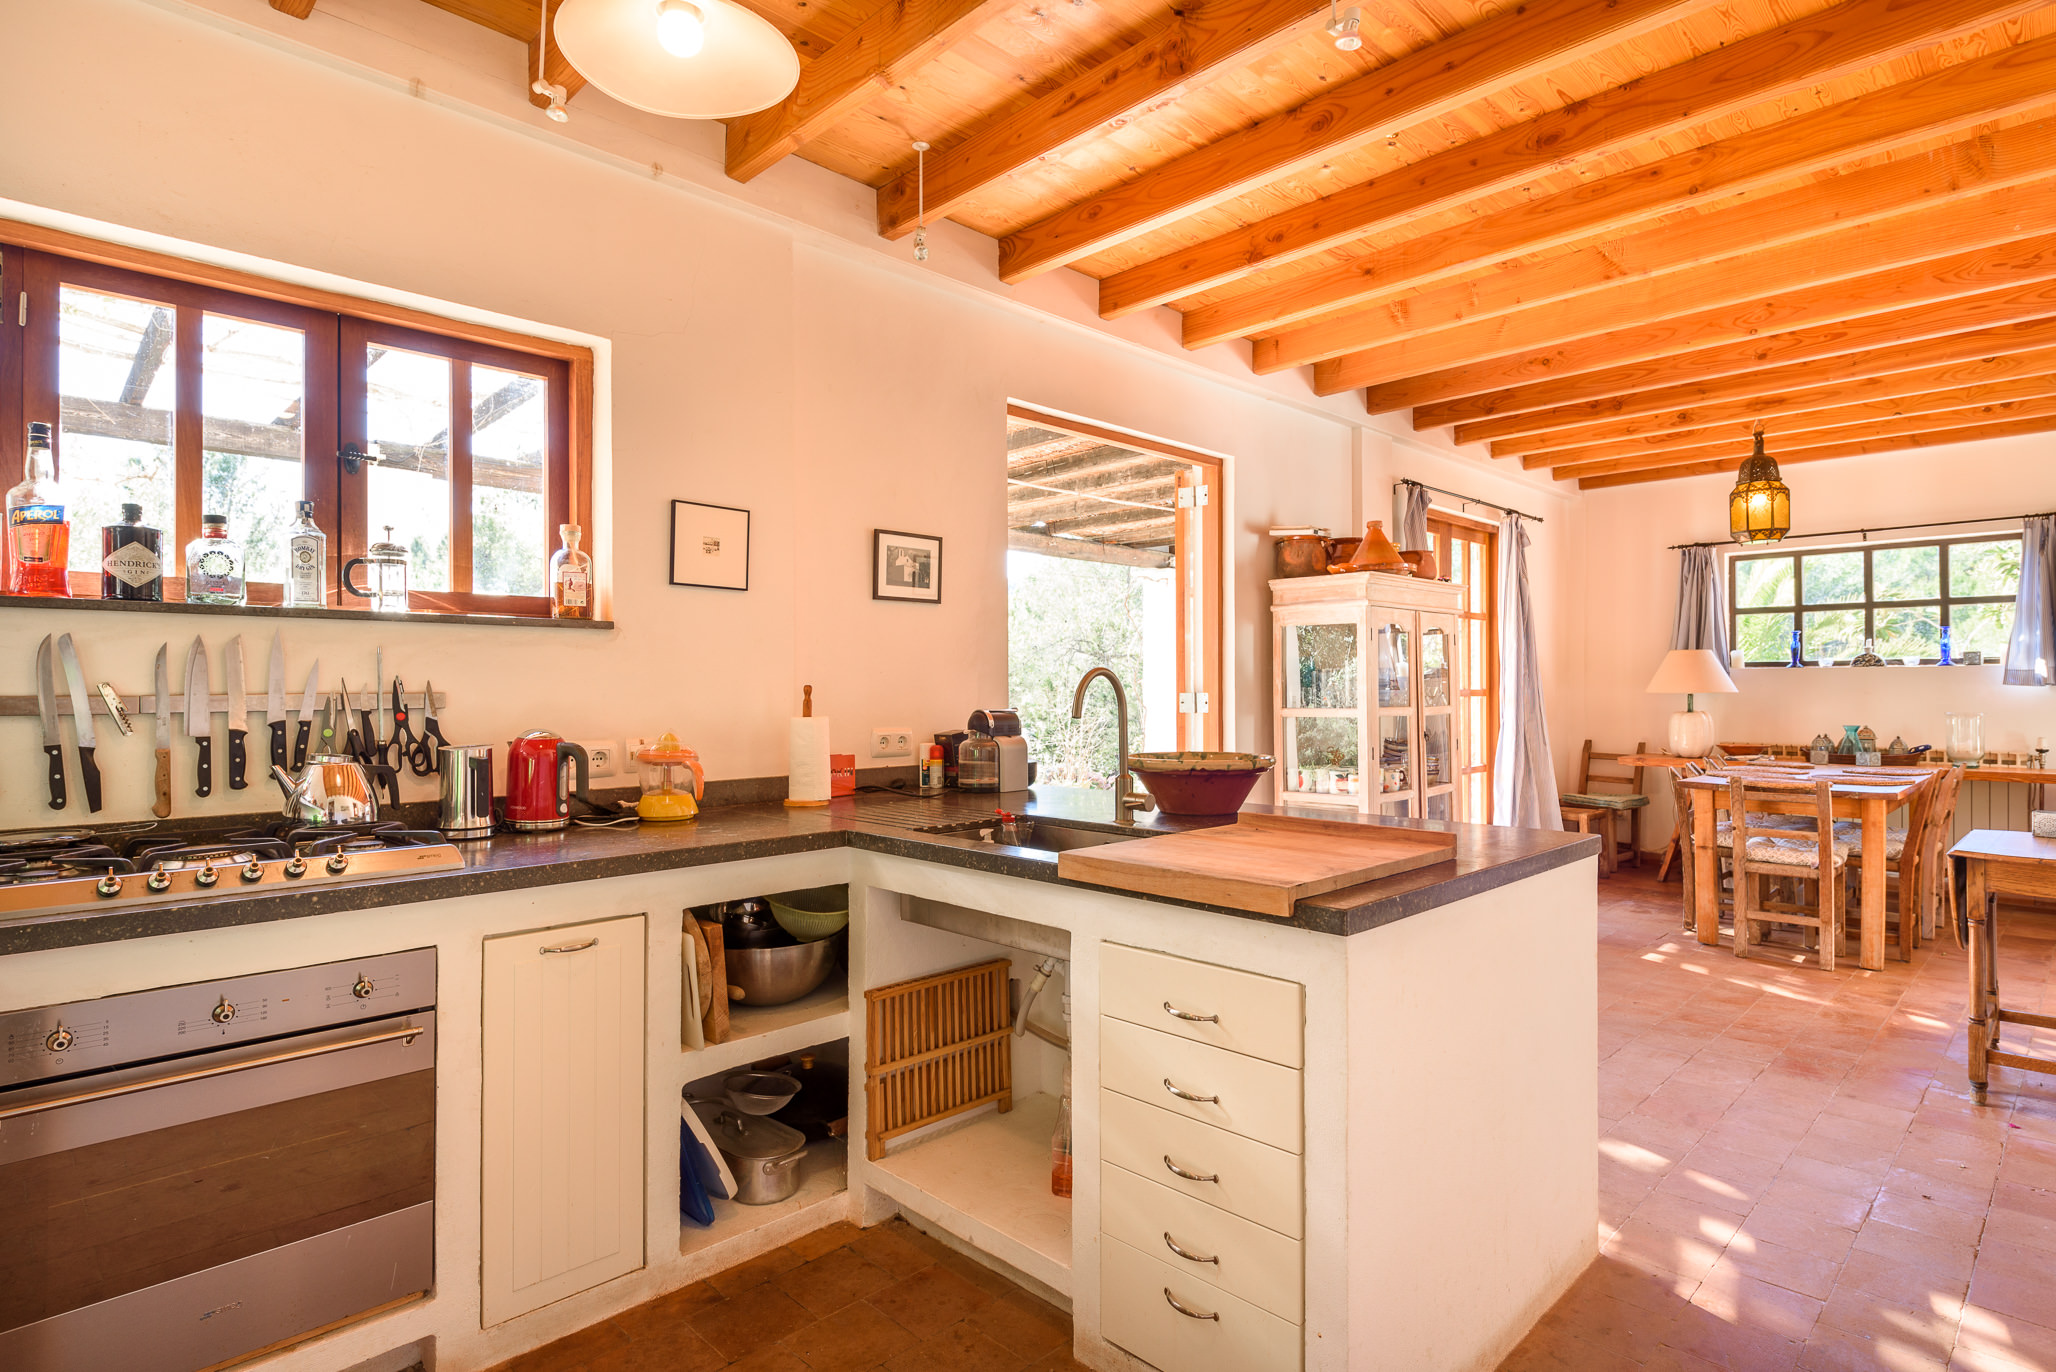 Charmant huis in Ibiza-stijl te koop in Santa Eularia